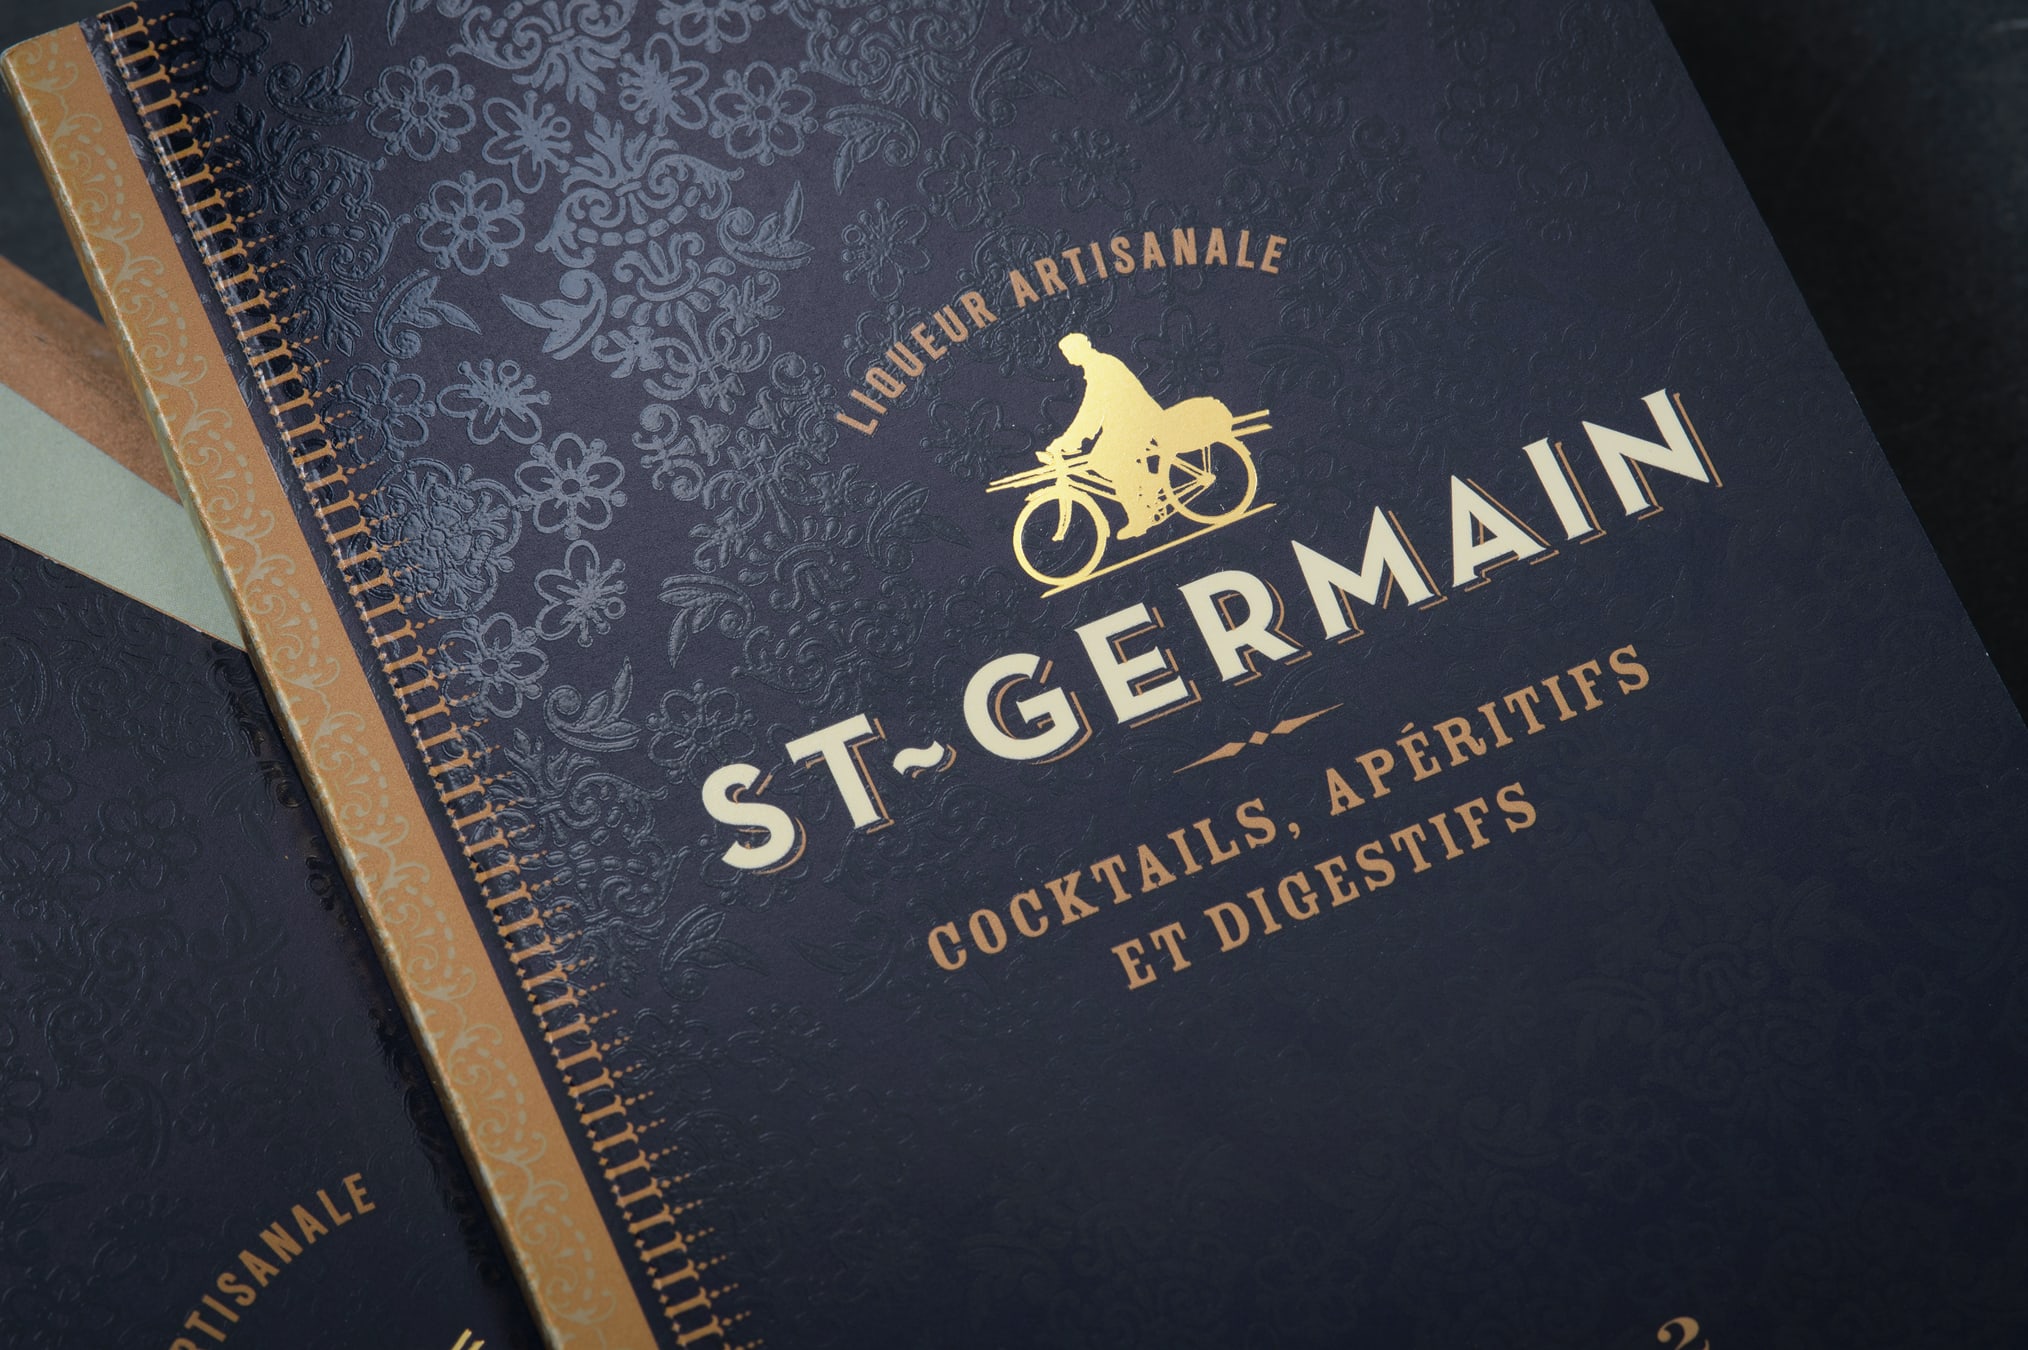 St-Germain spirits promotion design recipe book cover